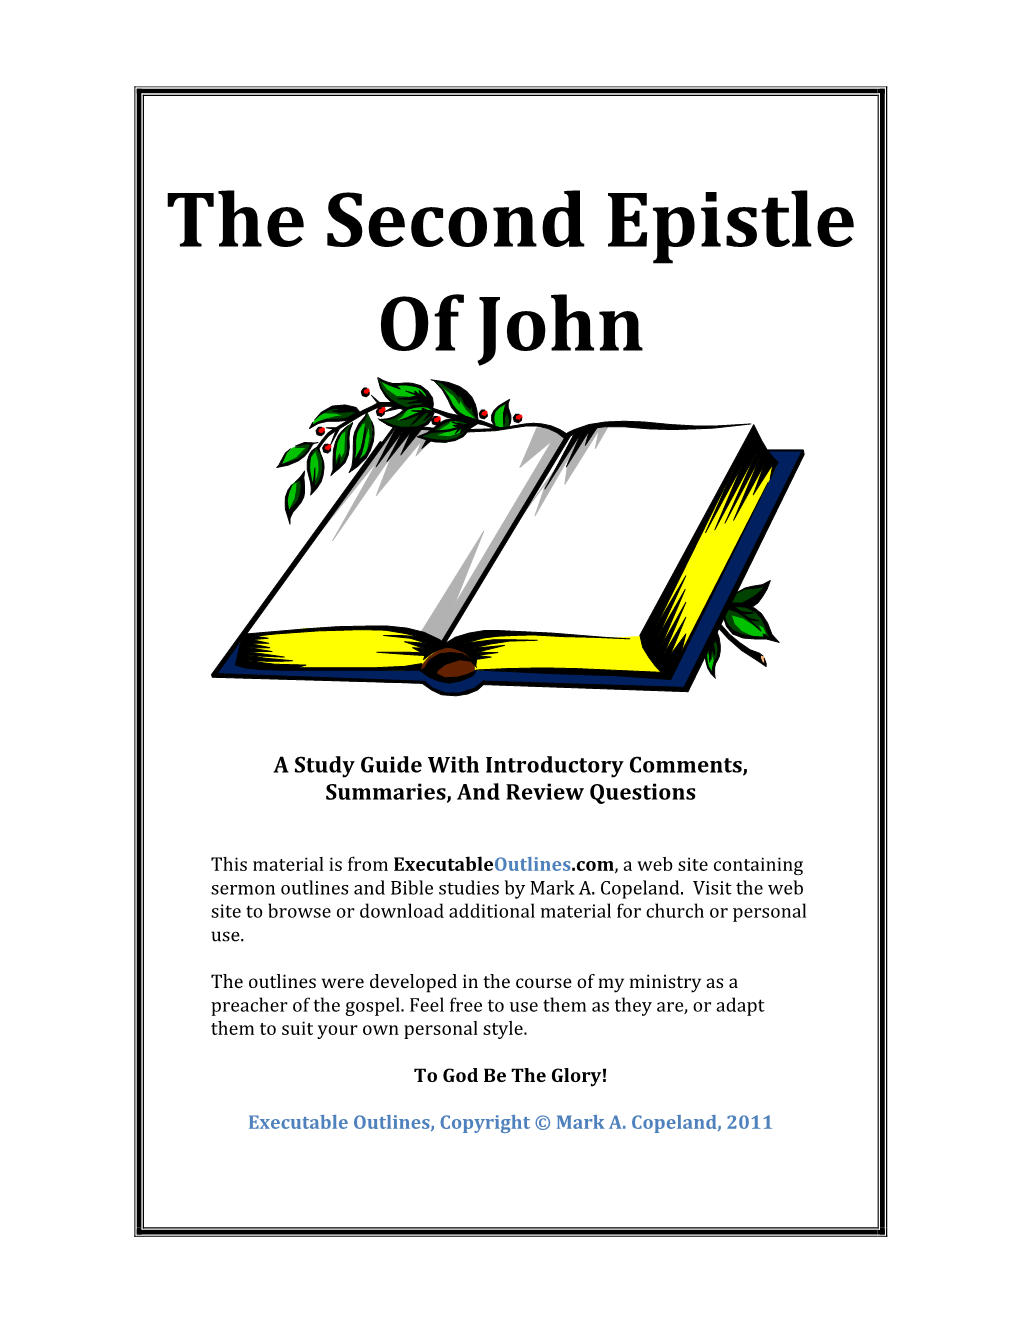 The Second Epistle of John